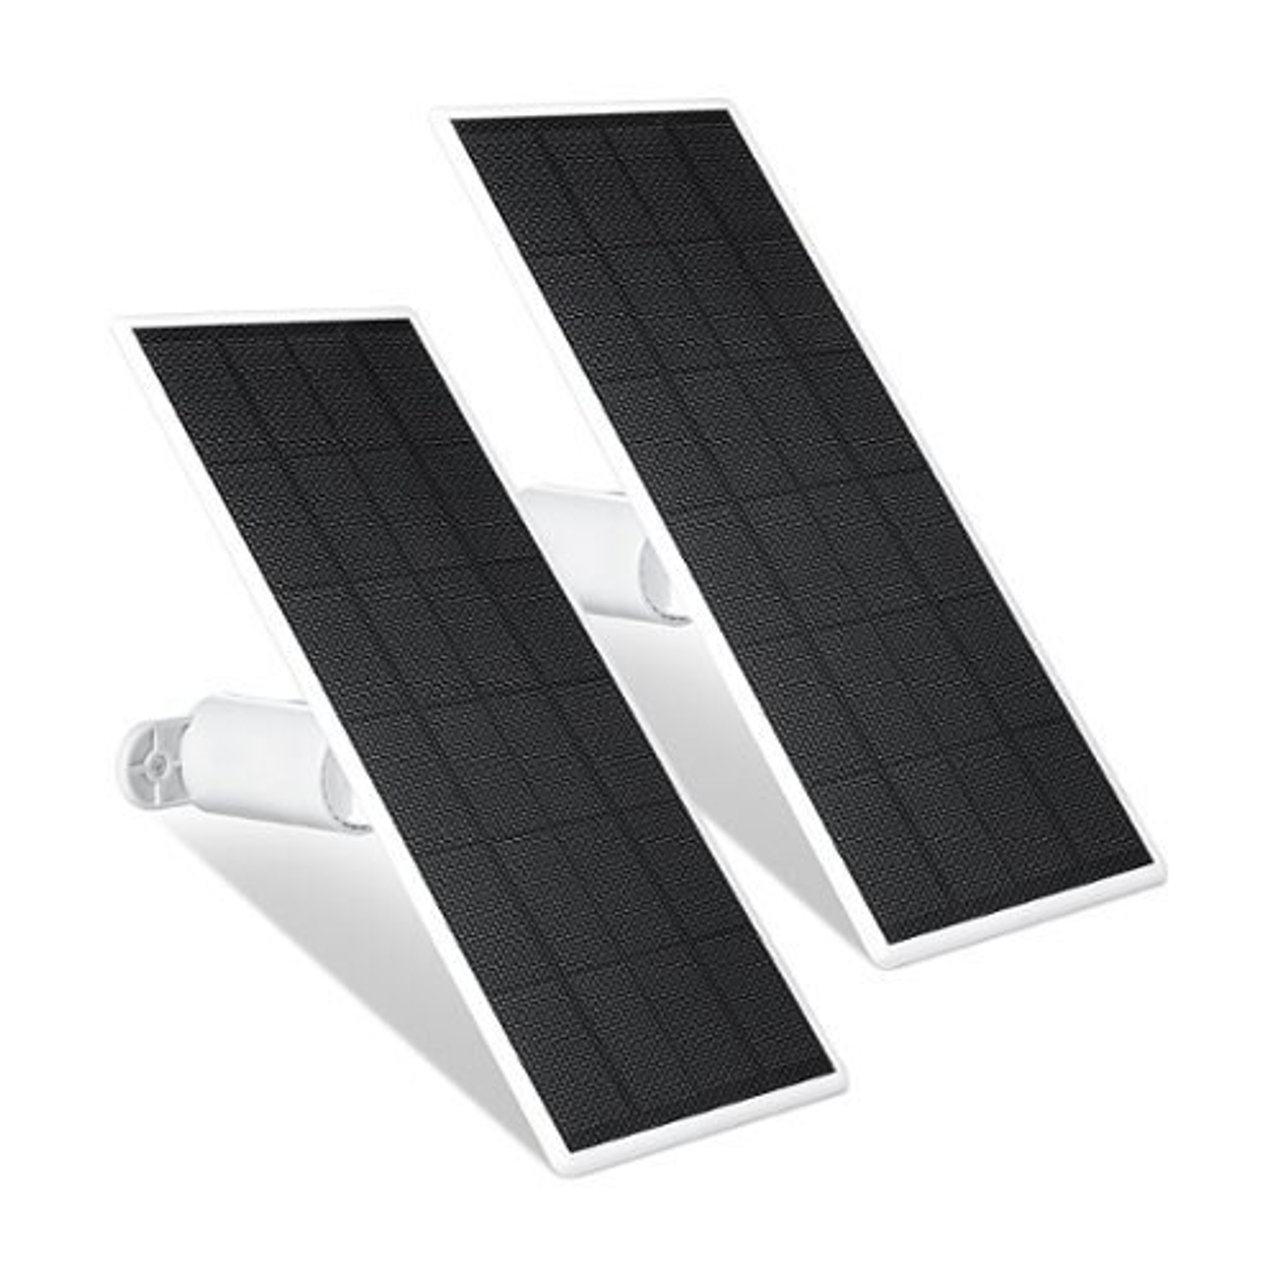 Wasserstein - Solar Panel for Google Nest Cam Outdoor or Indoor, Battery - 2.5W Solar Power - Made for Google Nest (2 Pack) - White